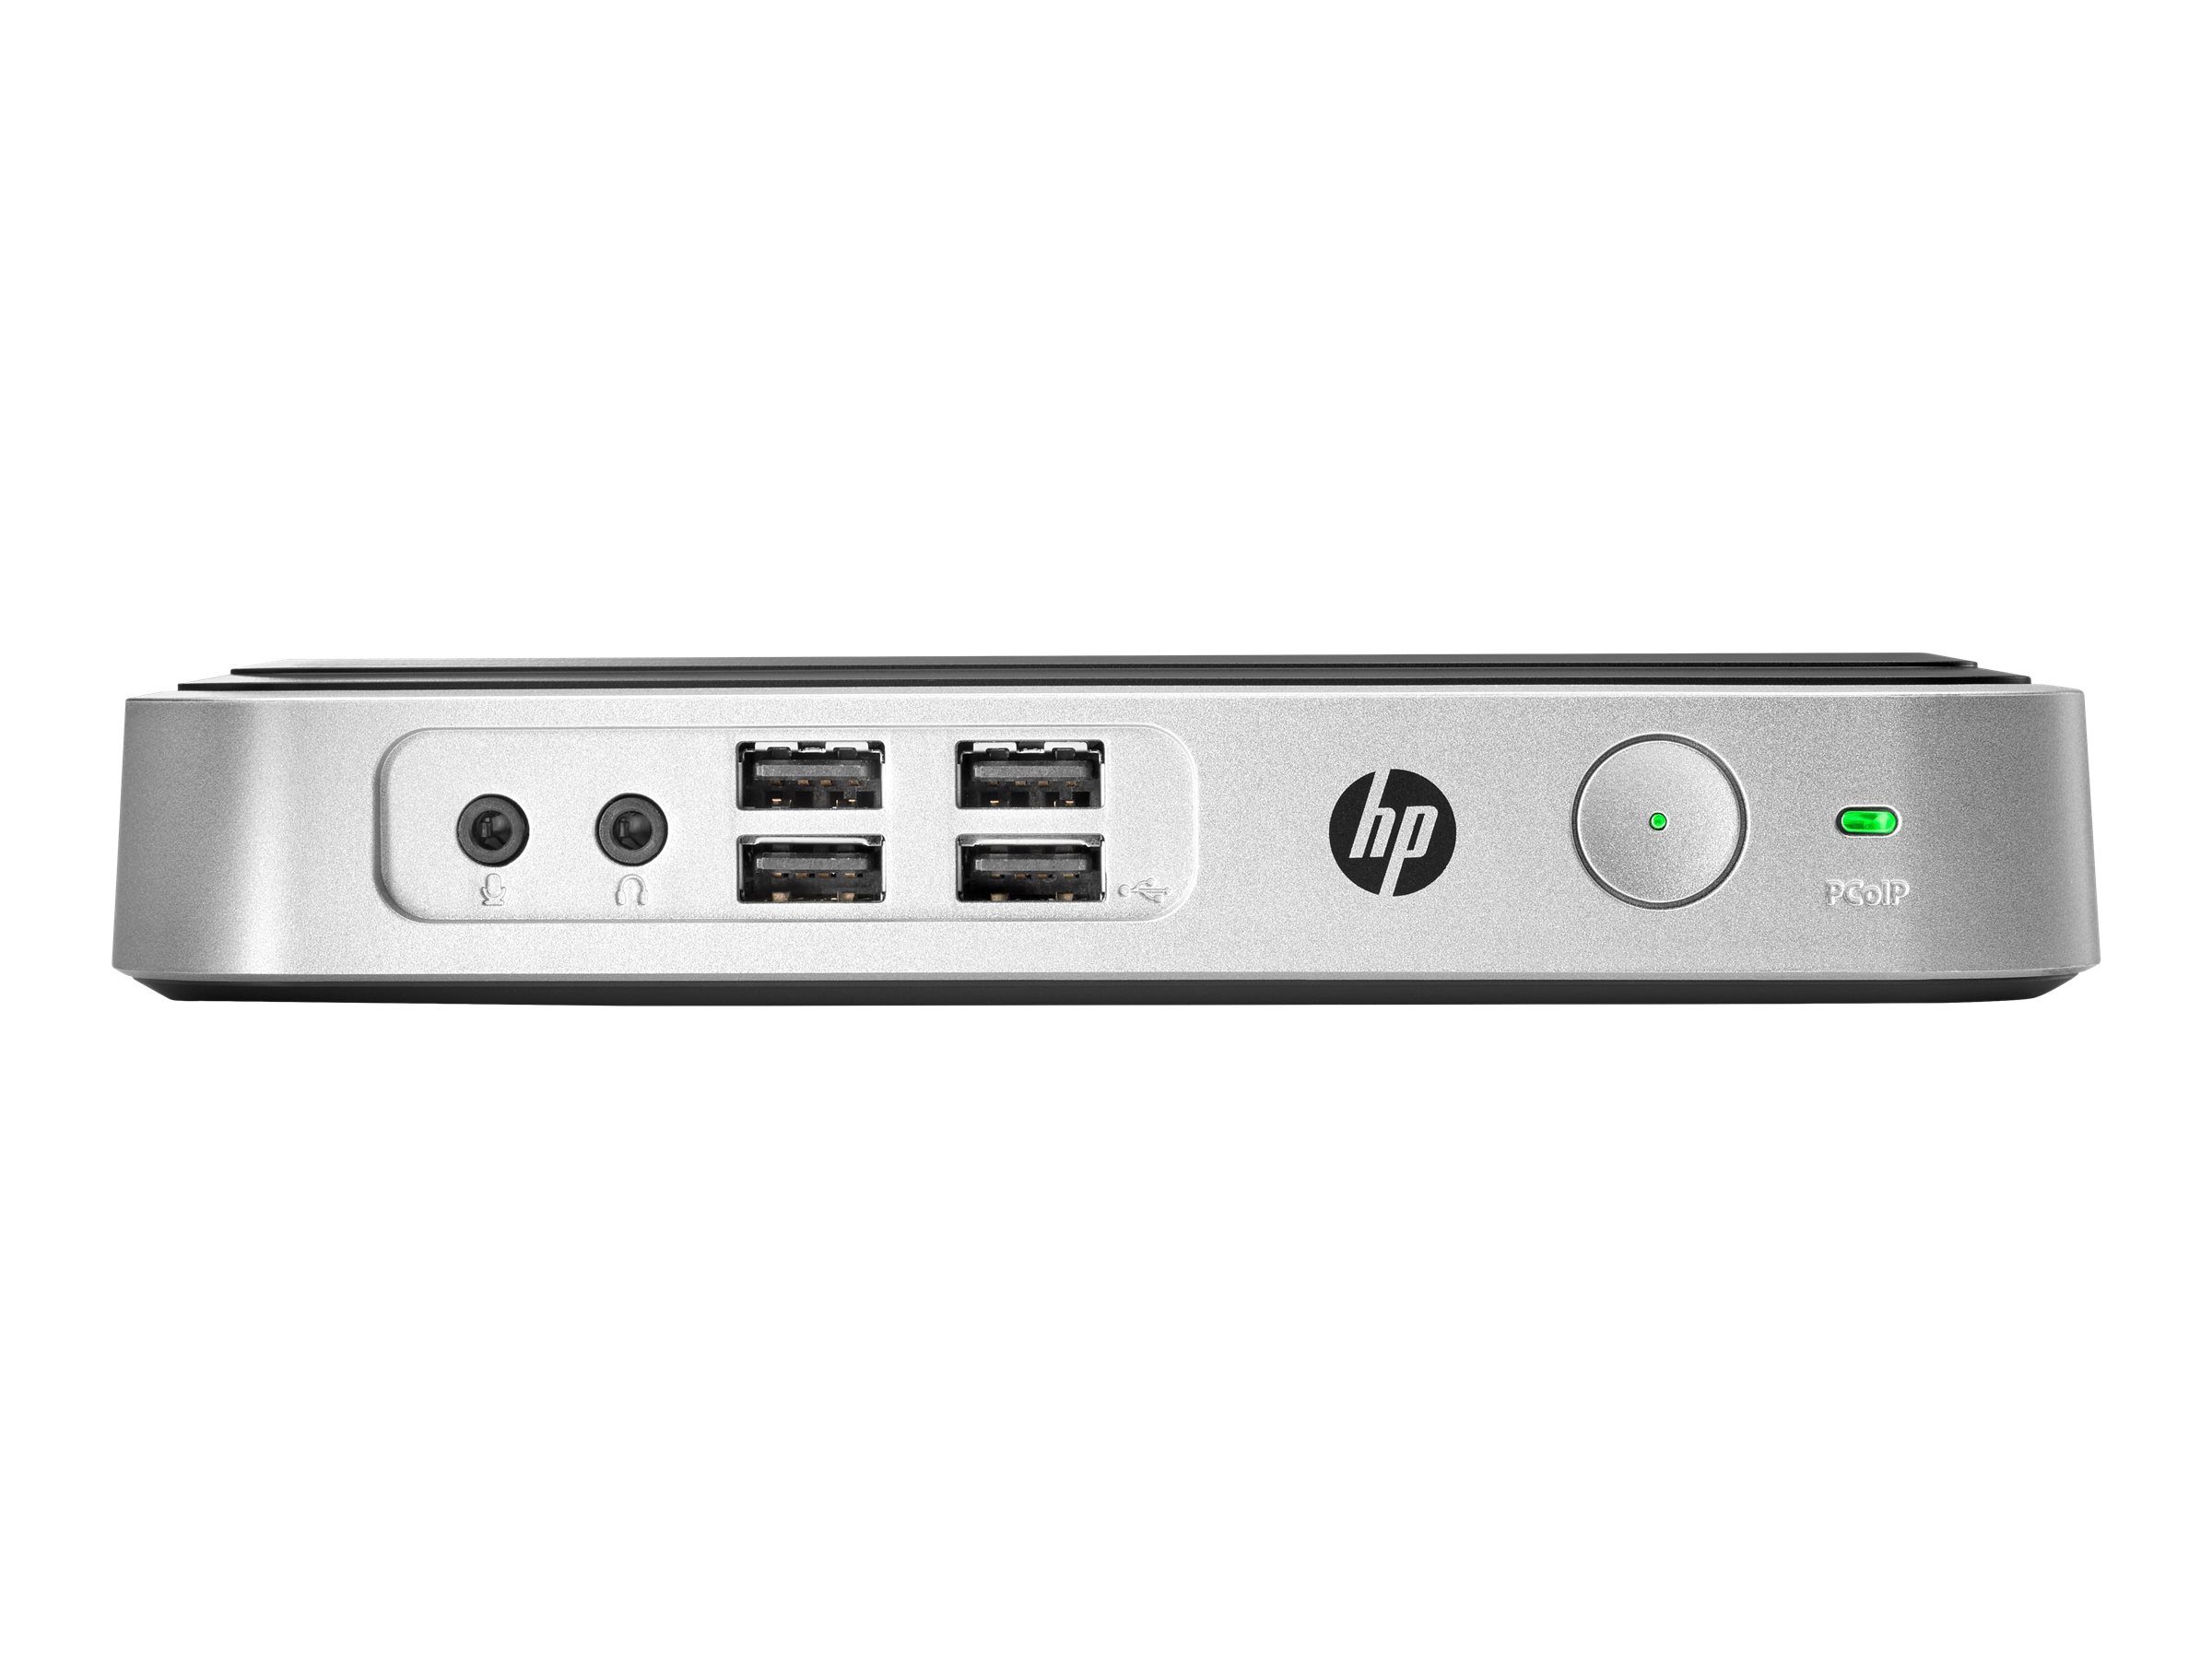 HP t310 G2 - Zero Client - DTS - 1 Tera2321 - RAM 512 MB - SSD